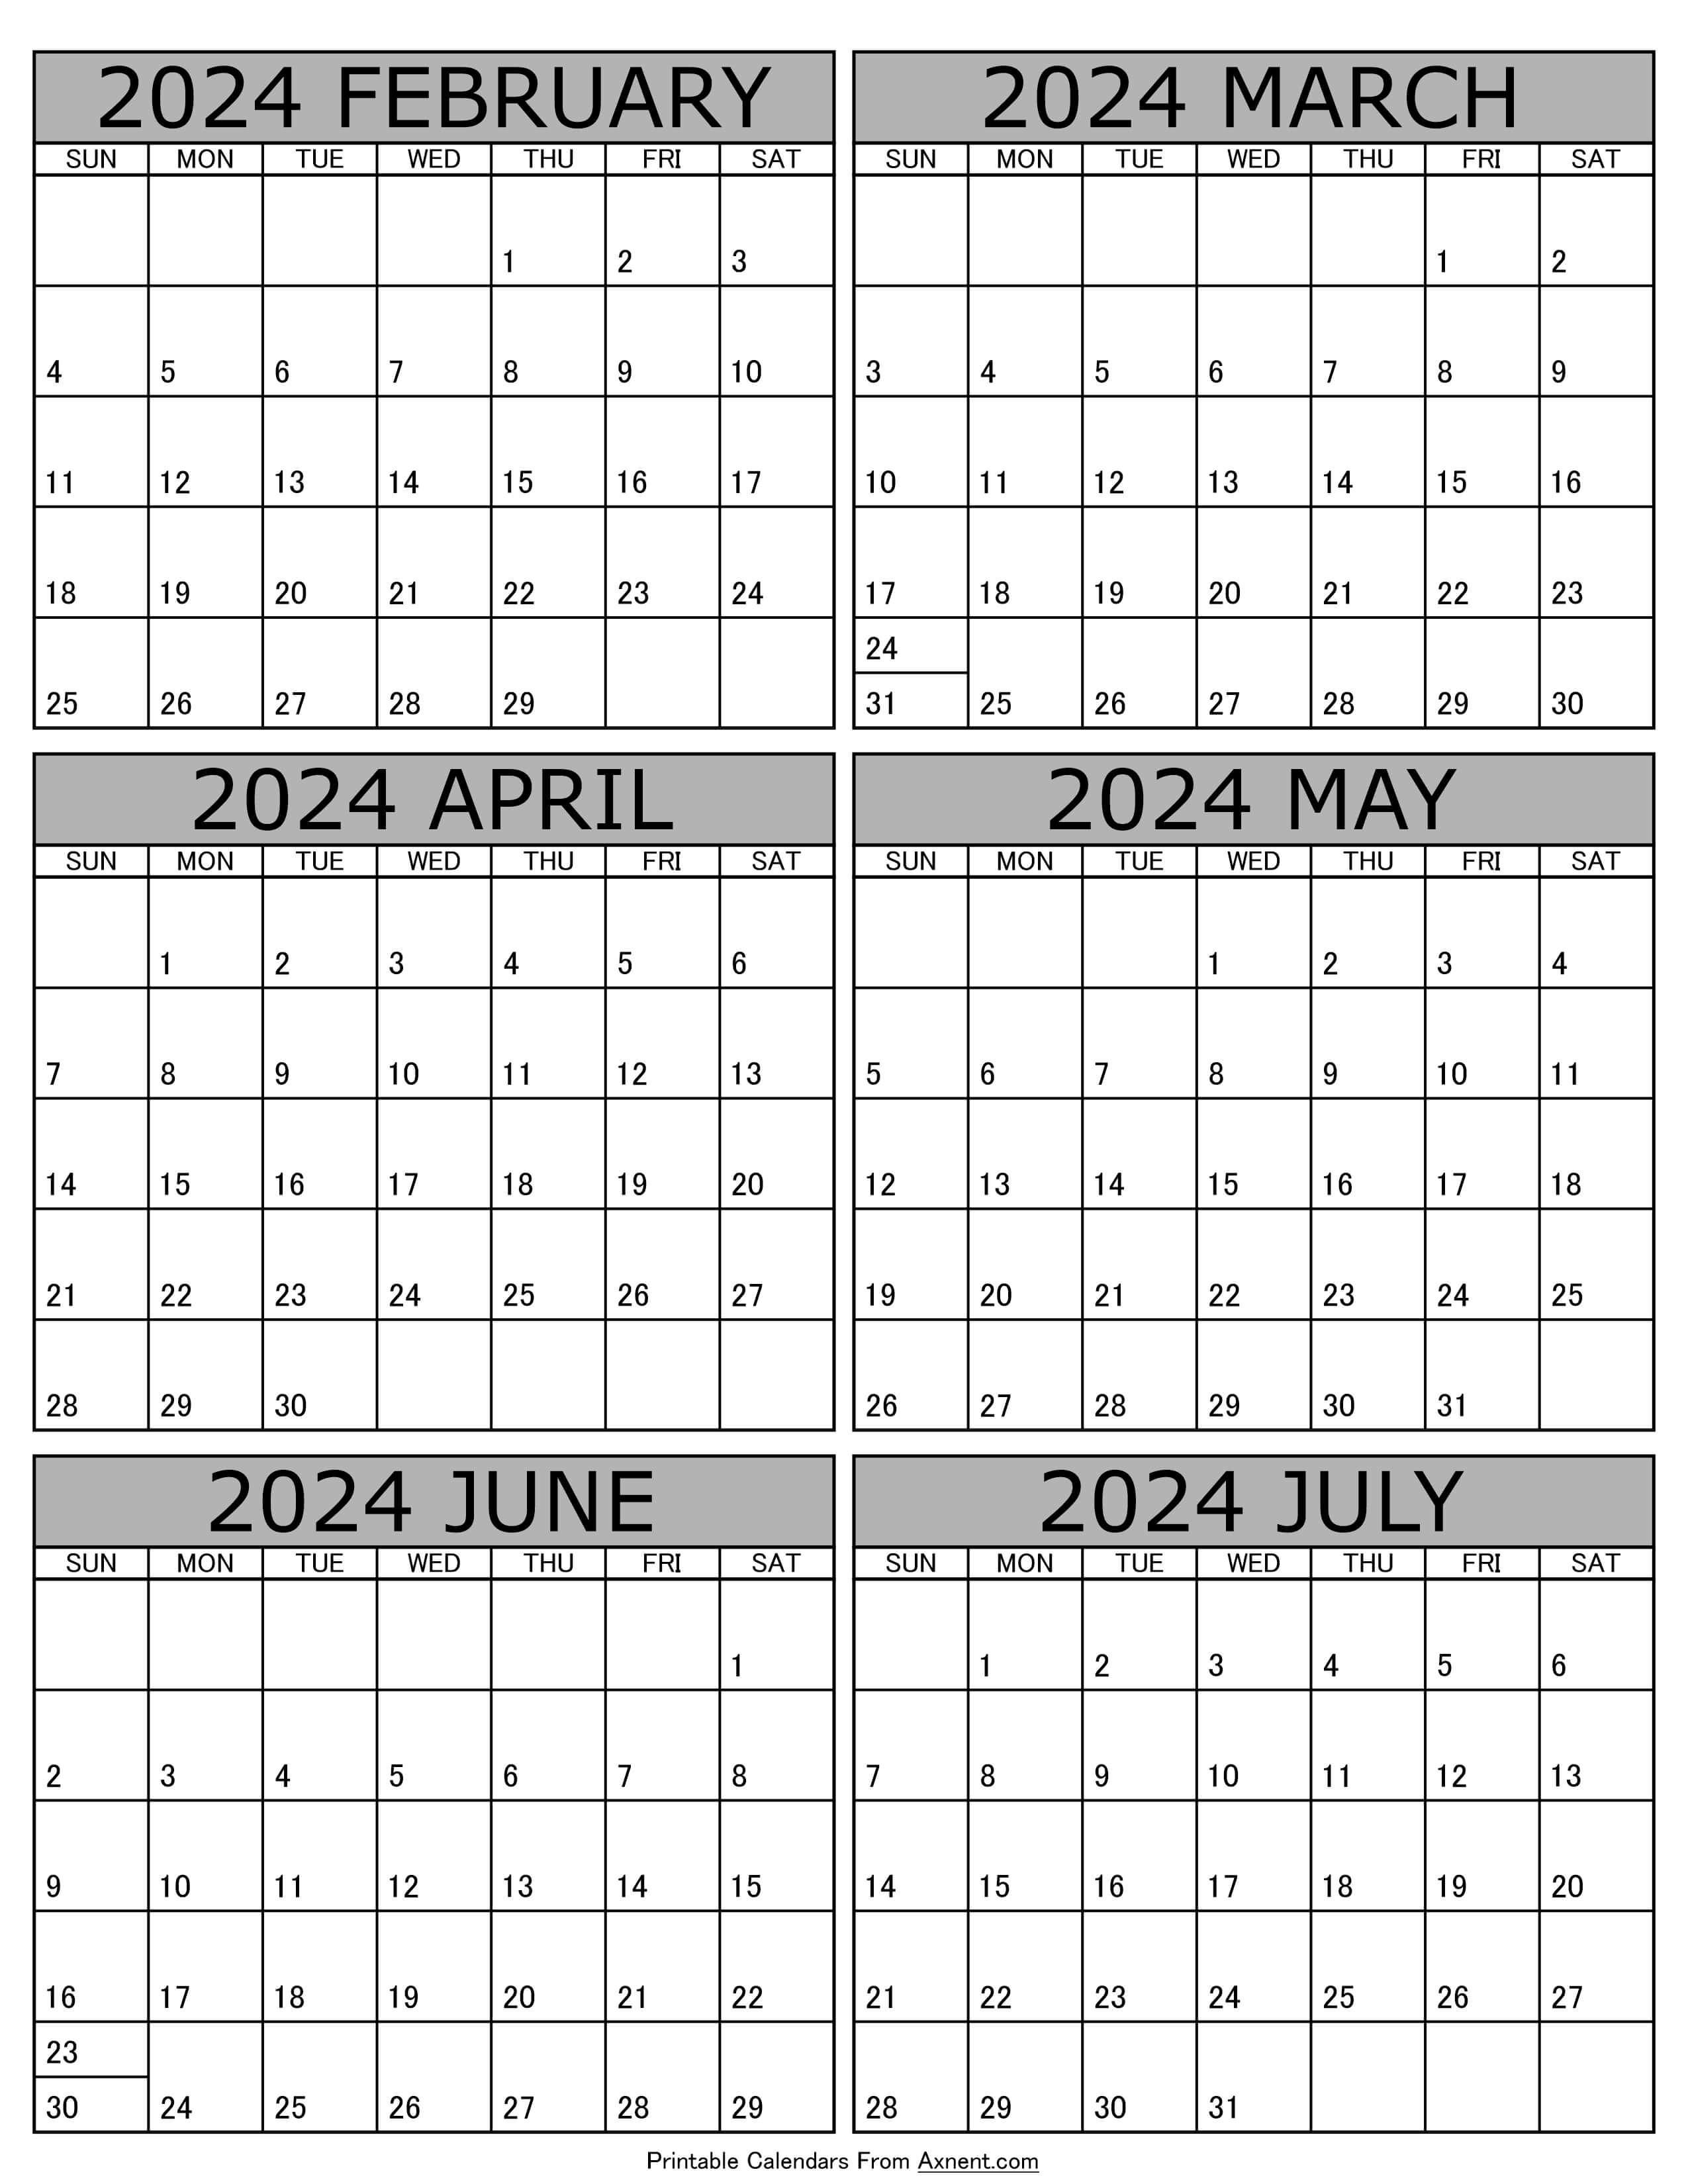 Calendar 2024 February to July